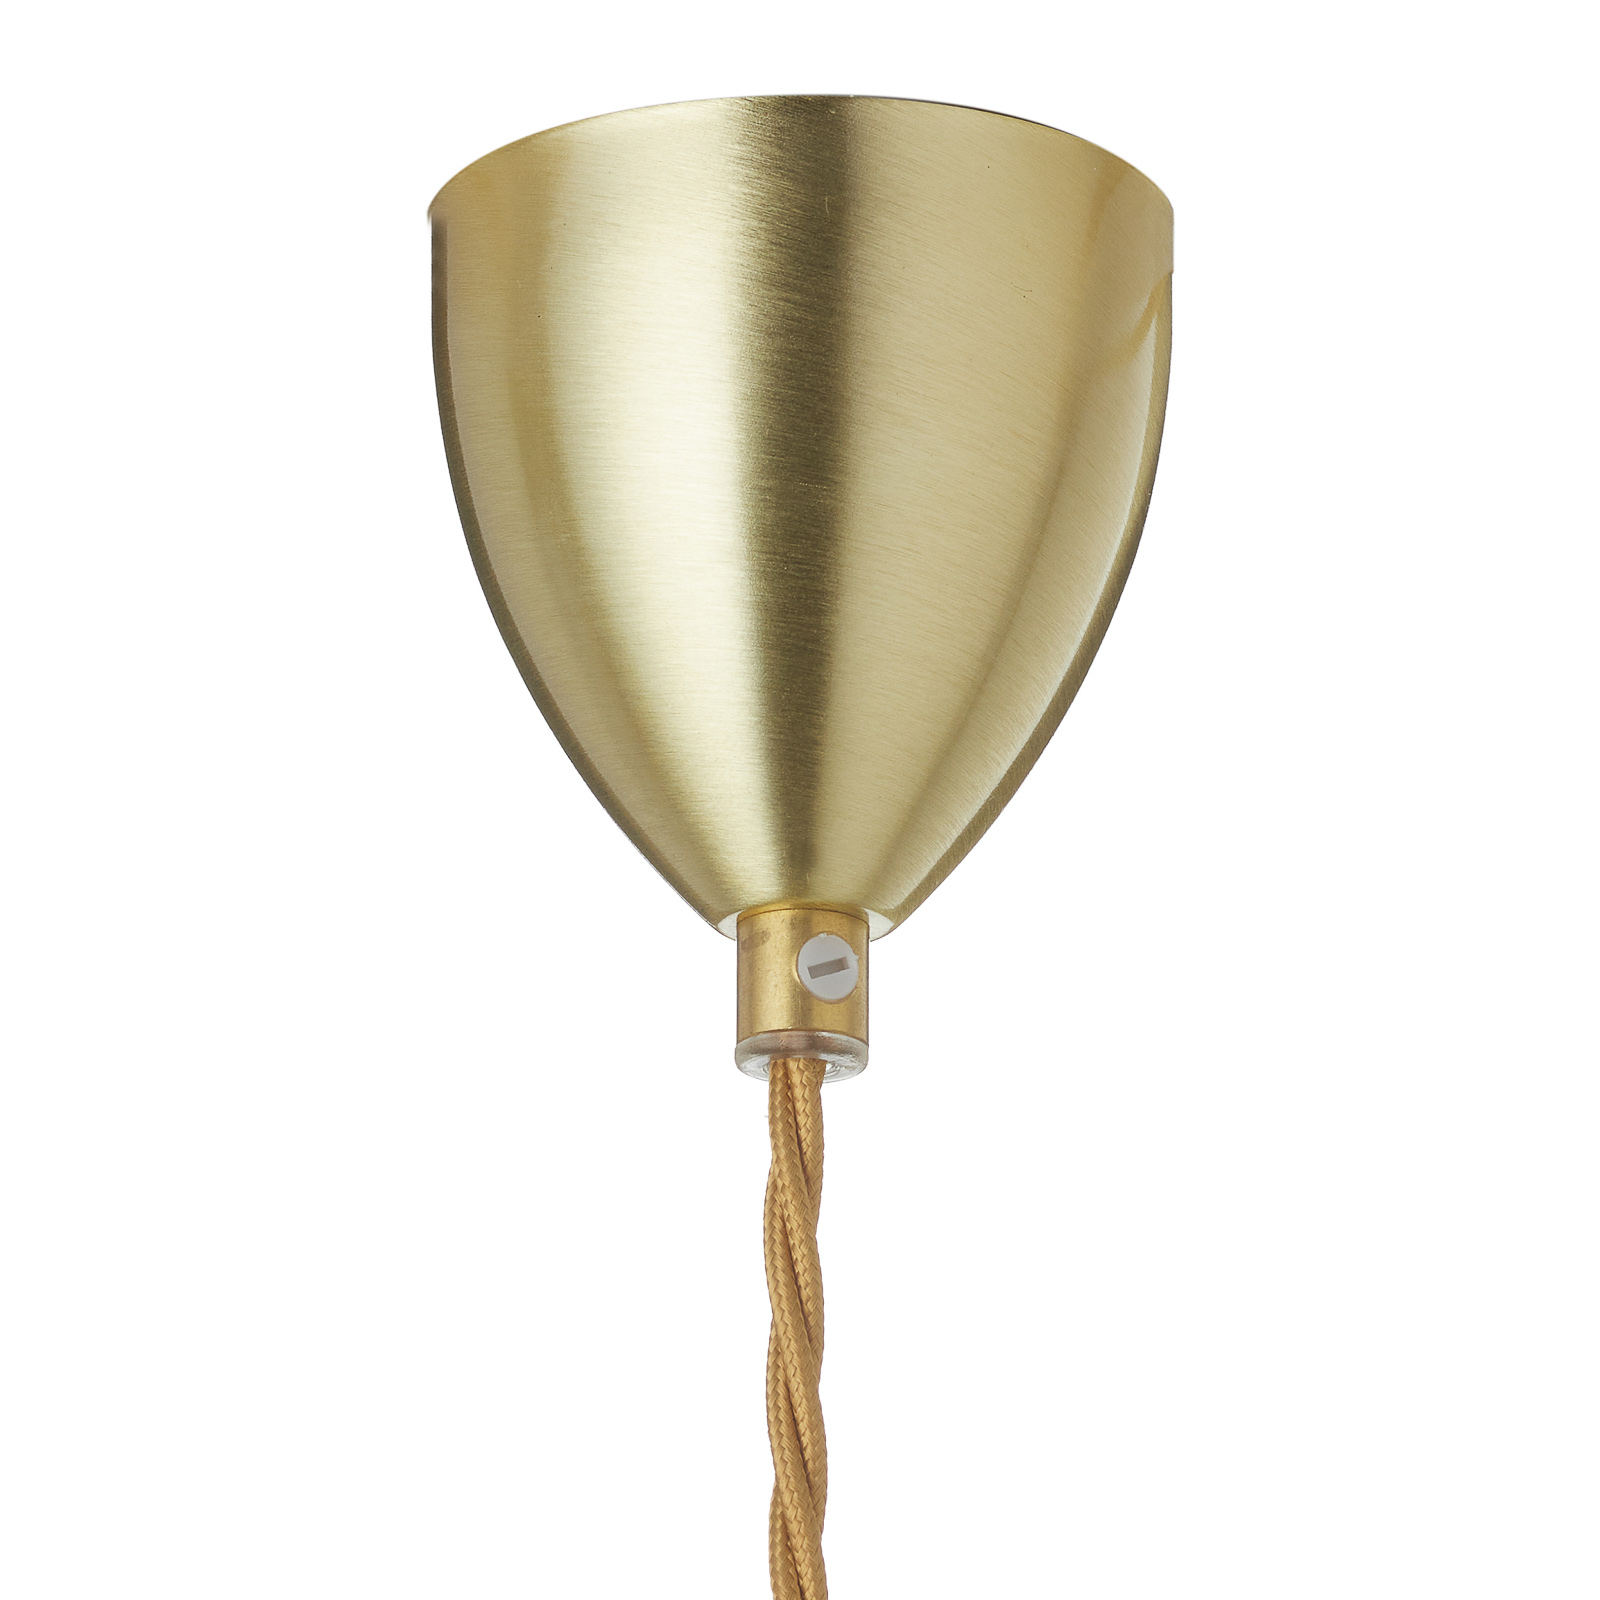 EBB & FLOW Horizon hanglamp goud rook Ø 36cm